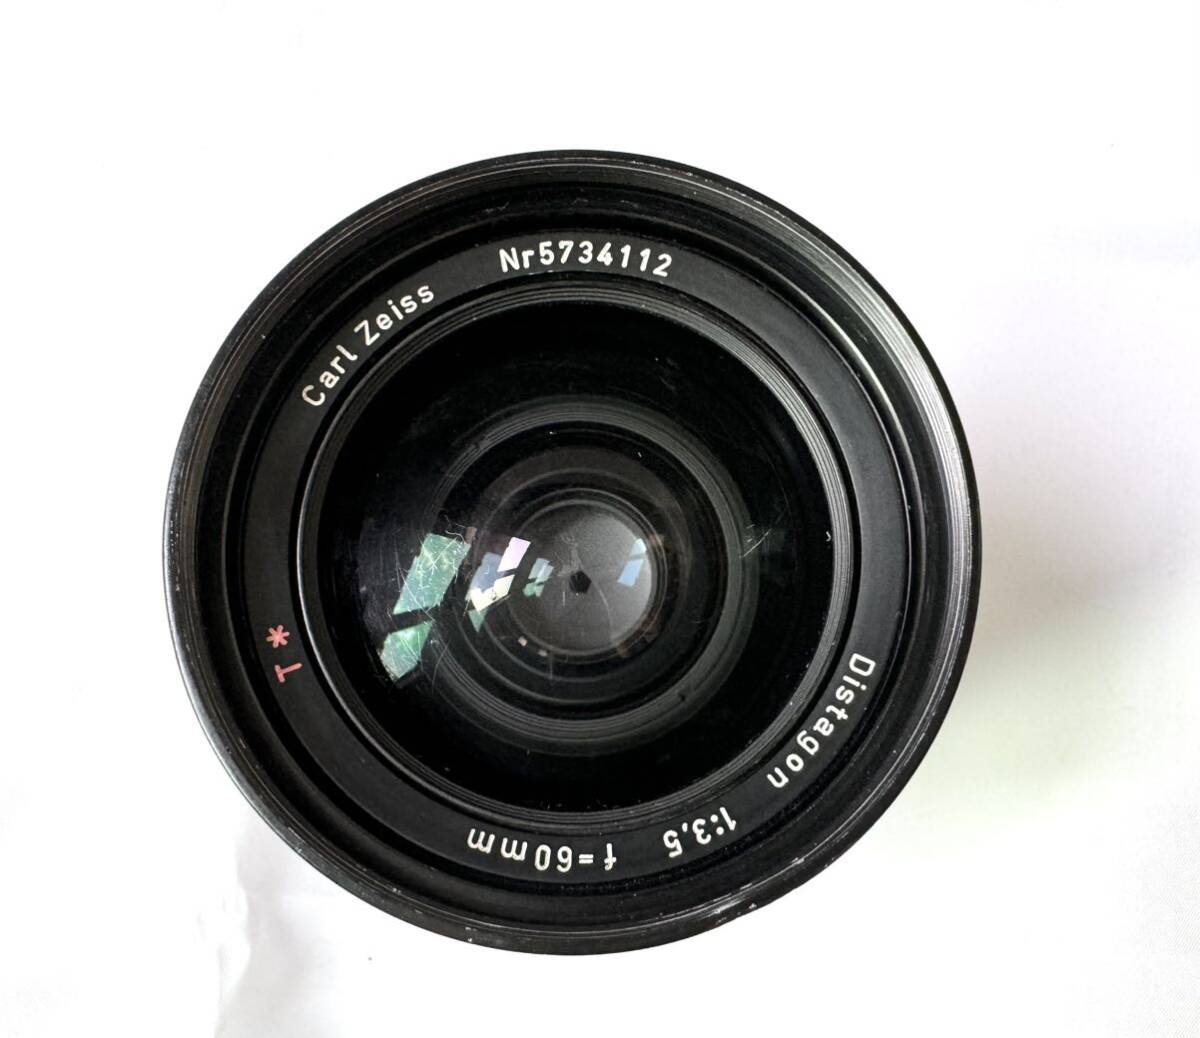 HASSELBLAD Carl Zeiss Distagon 60mm F3.5 T* Hasselblad ti start gon lens medium size single‐lens reflex 